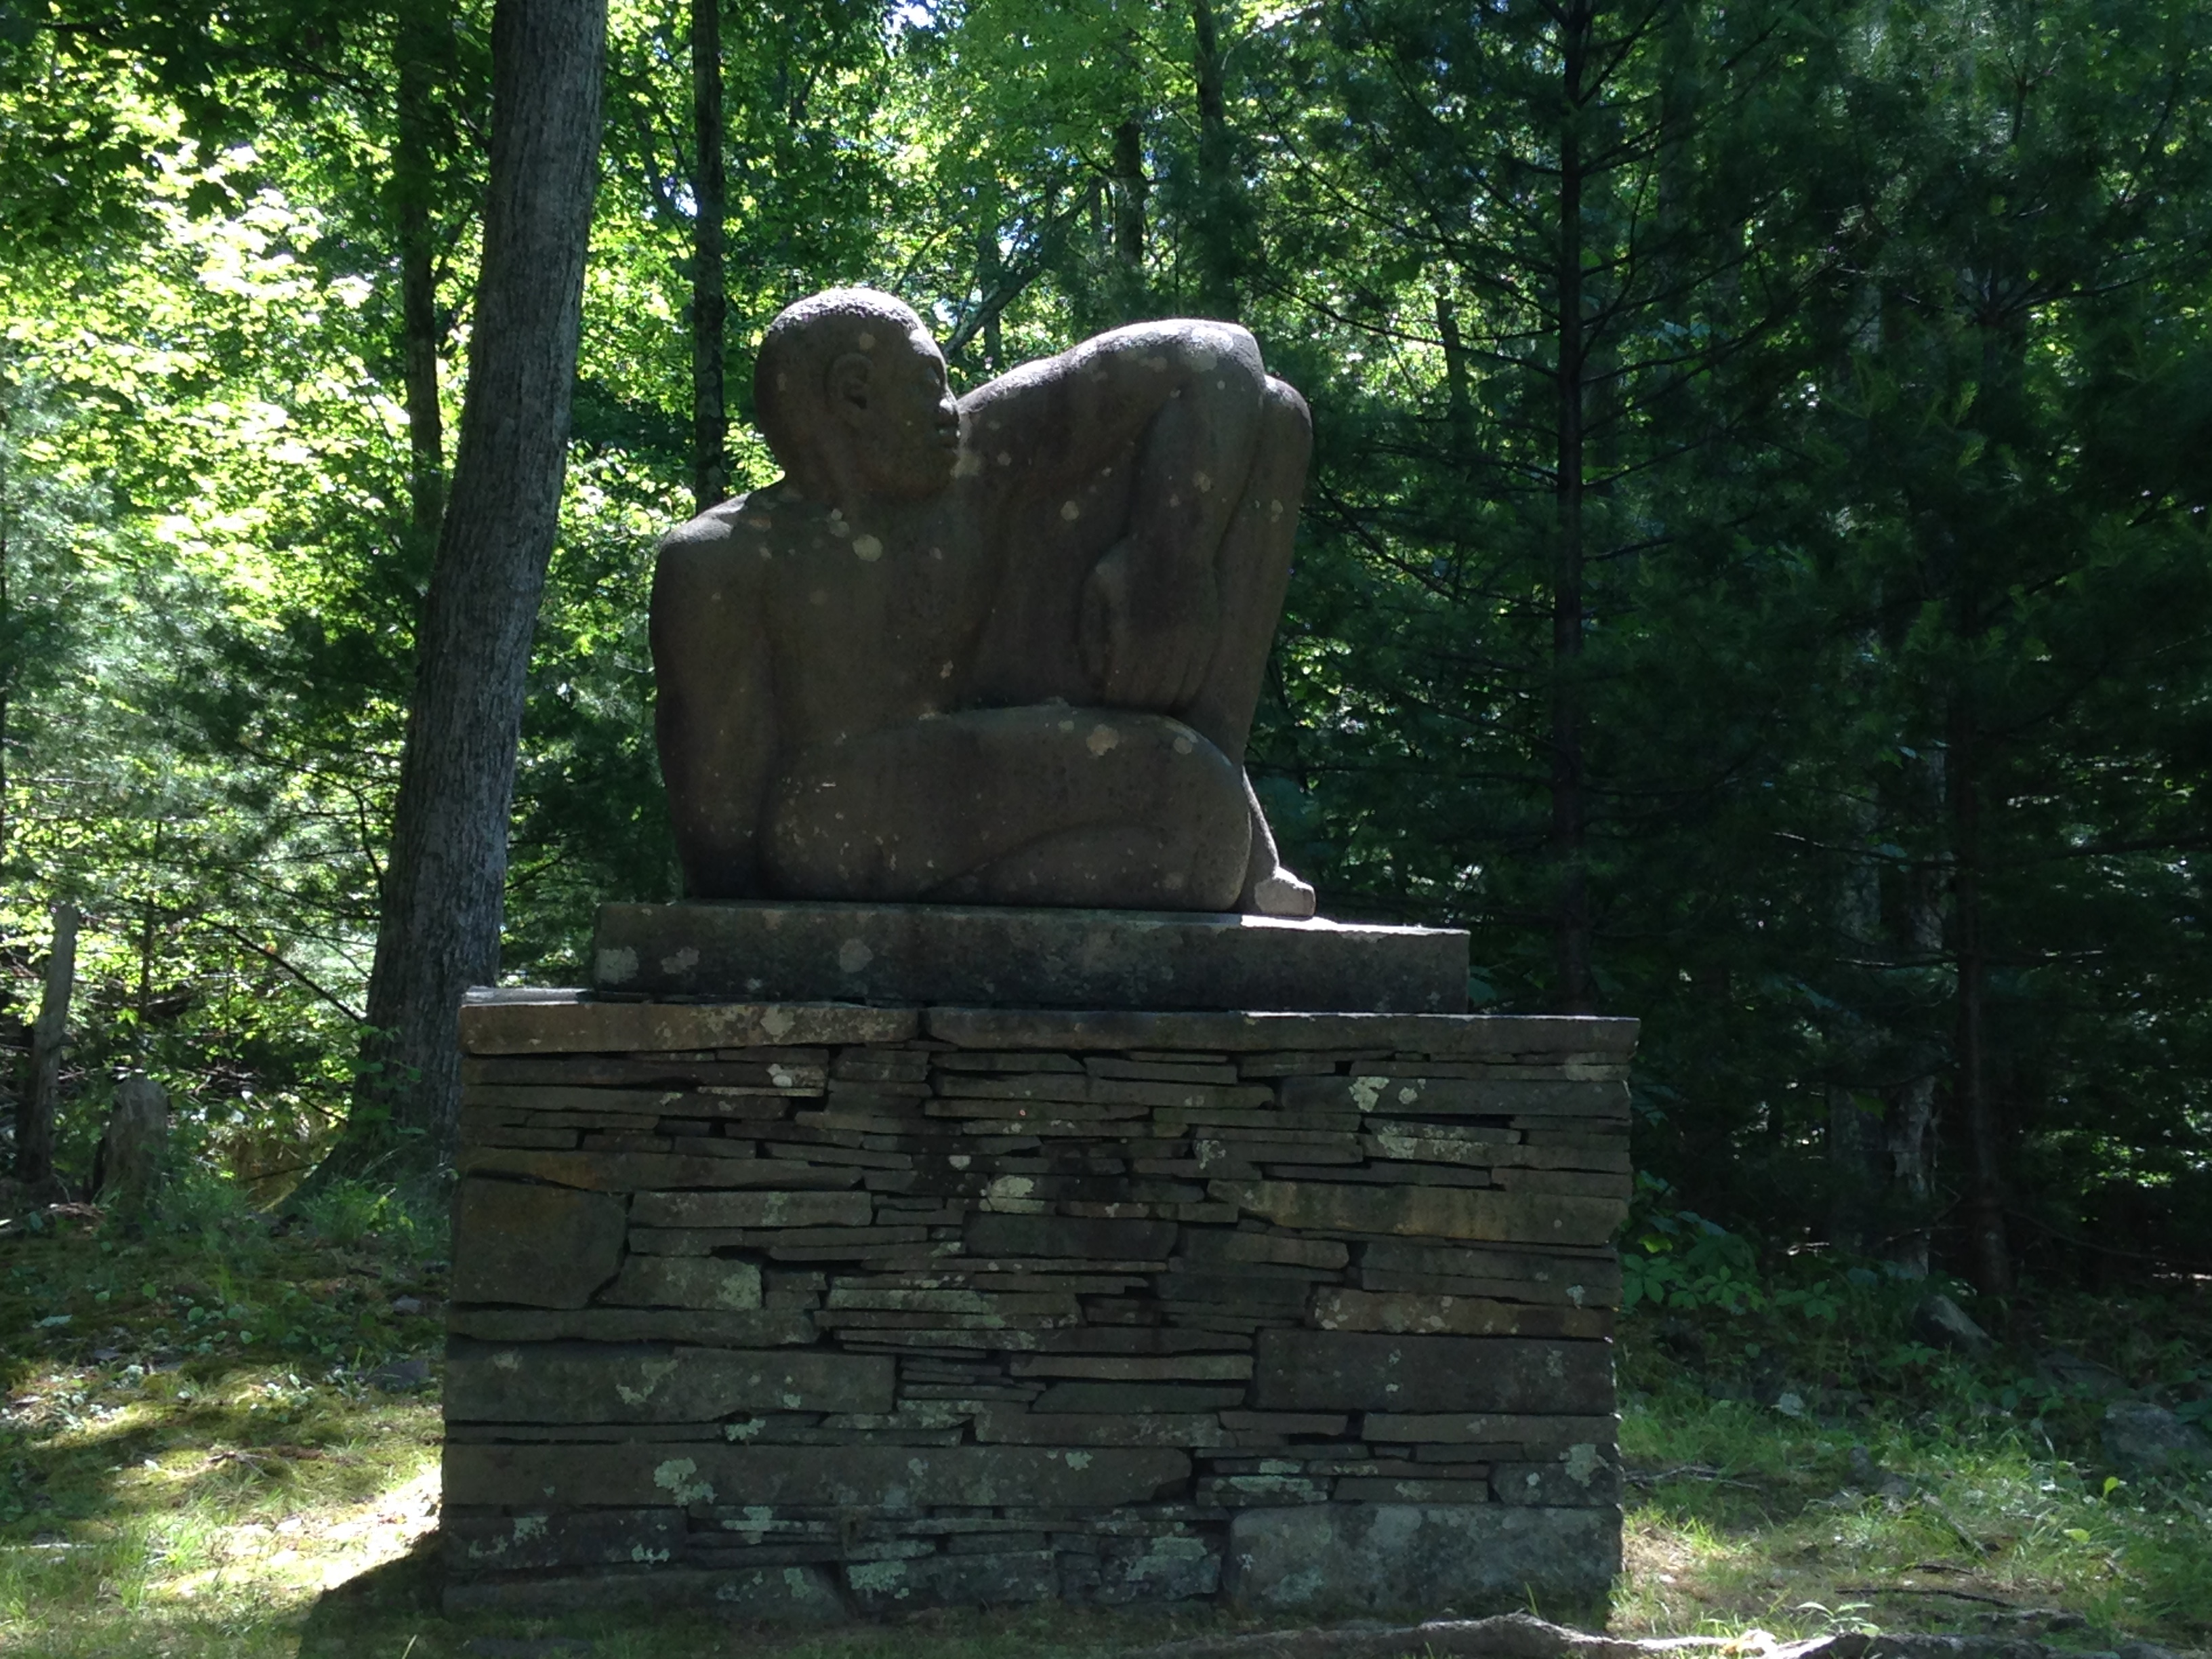 Opus 40 Sculpture Park - Saugerties, NY